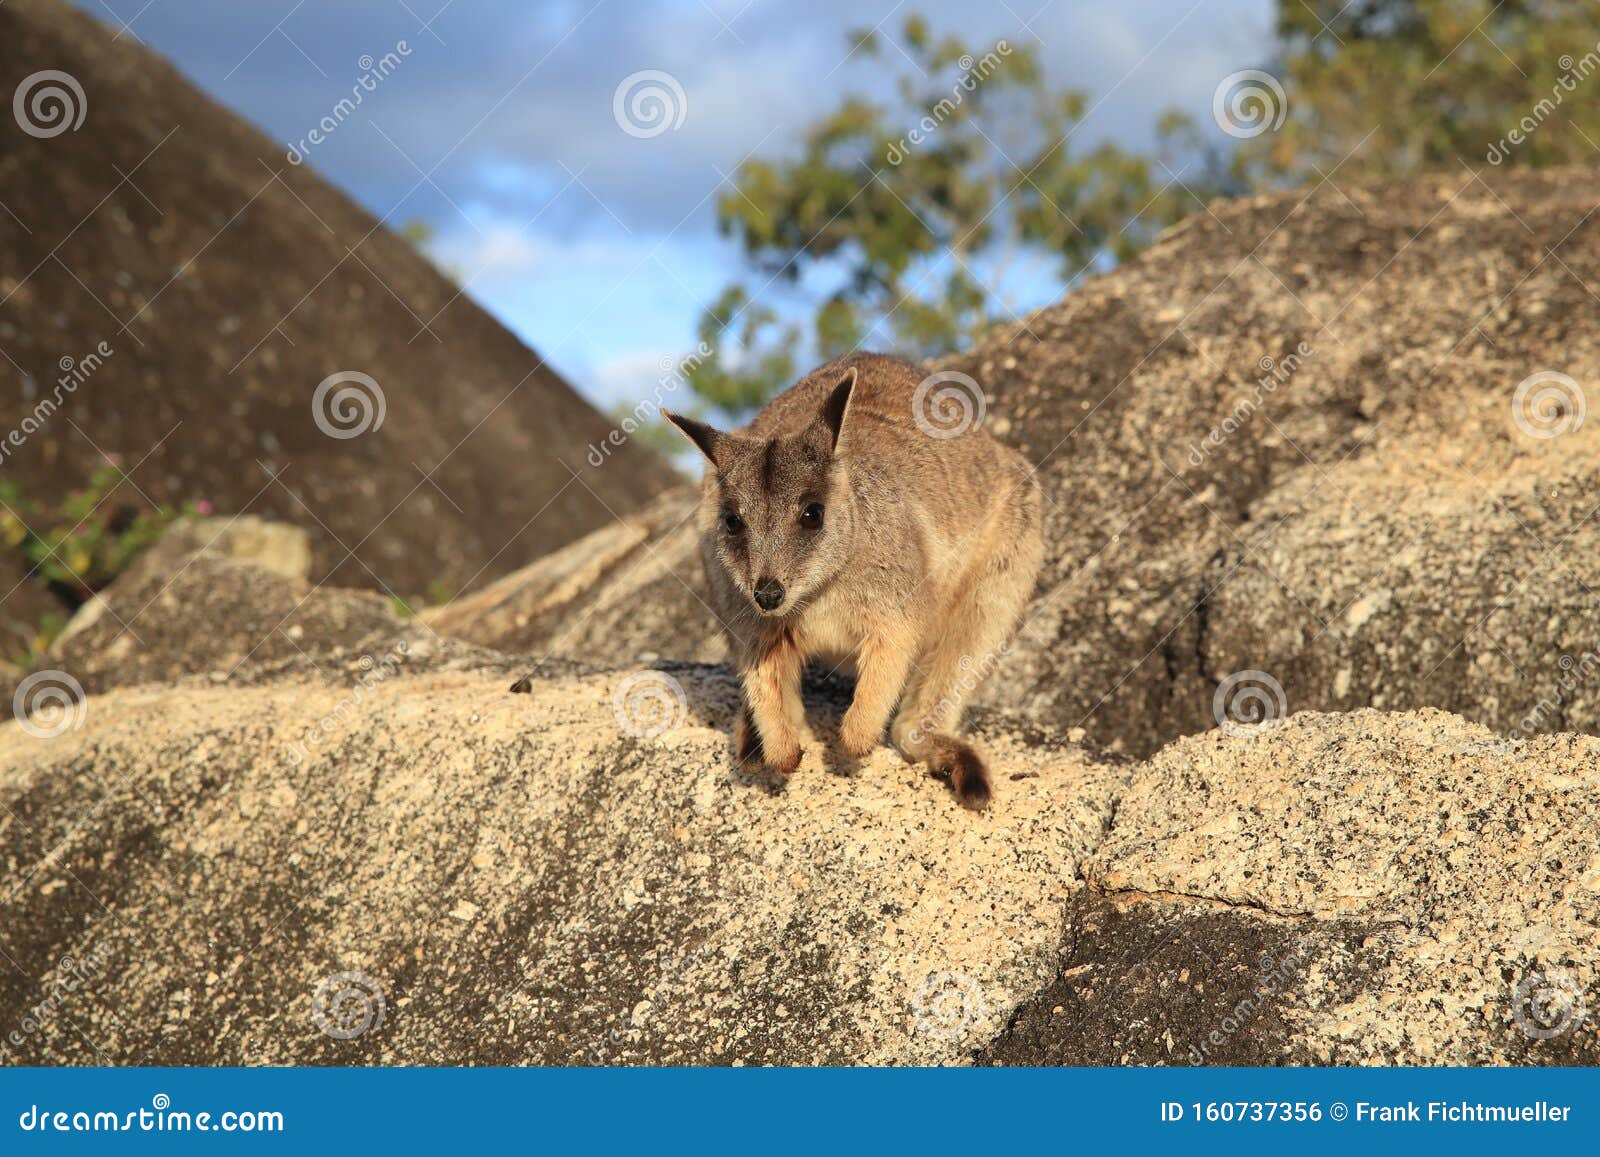 mareeba rock wallabies at granite gorge,queensland australia